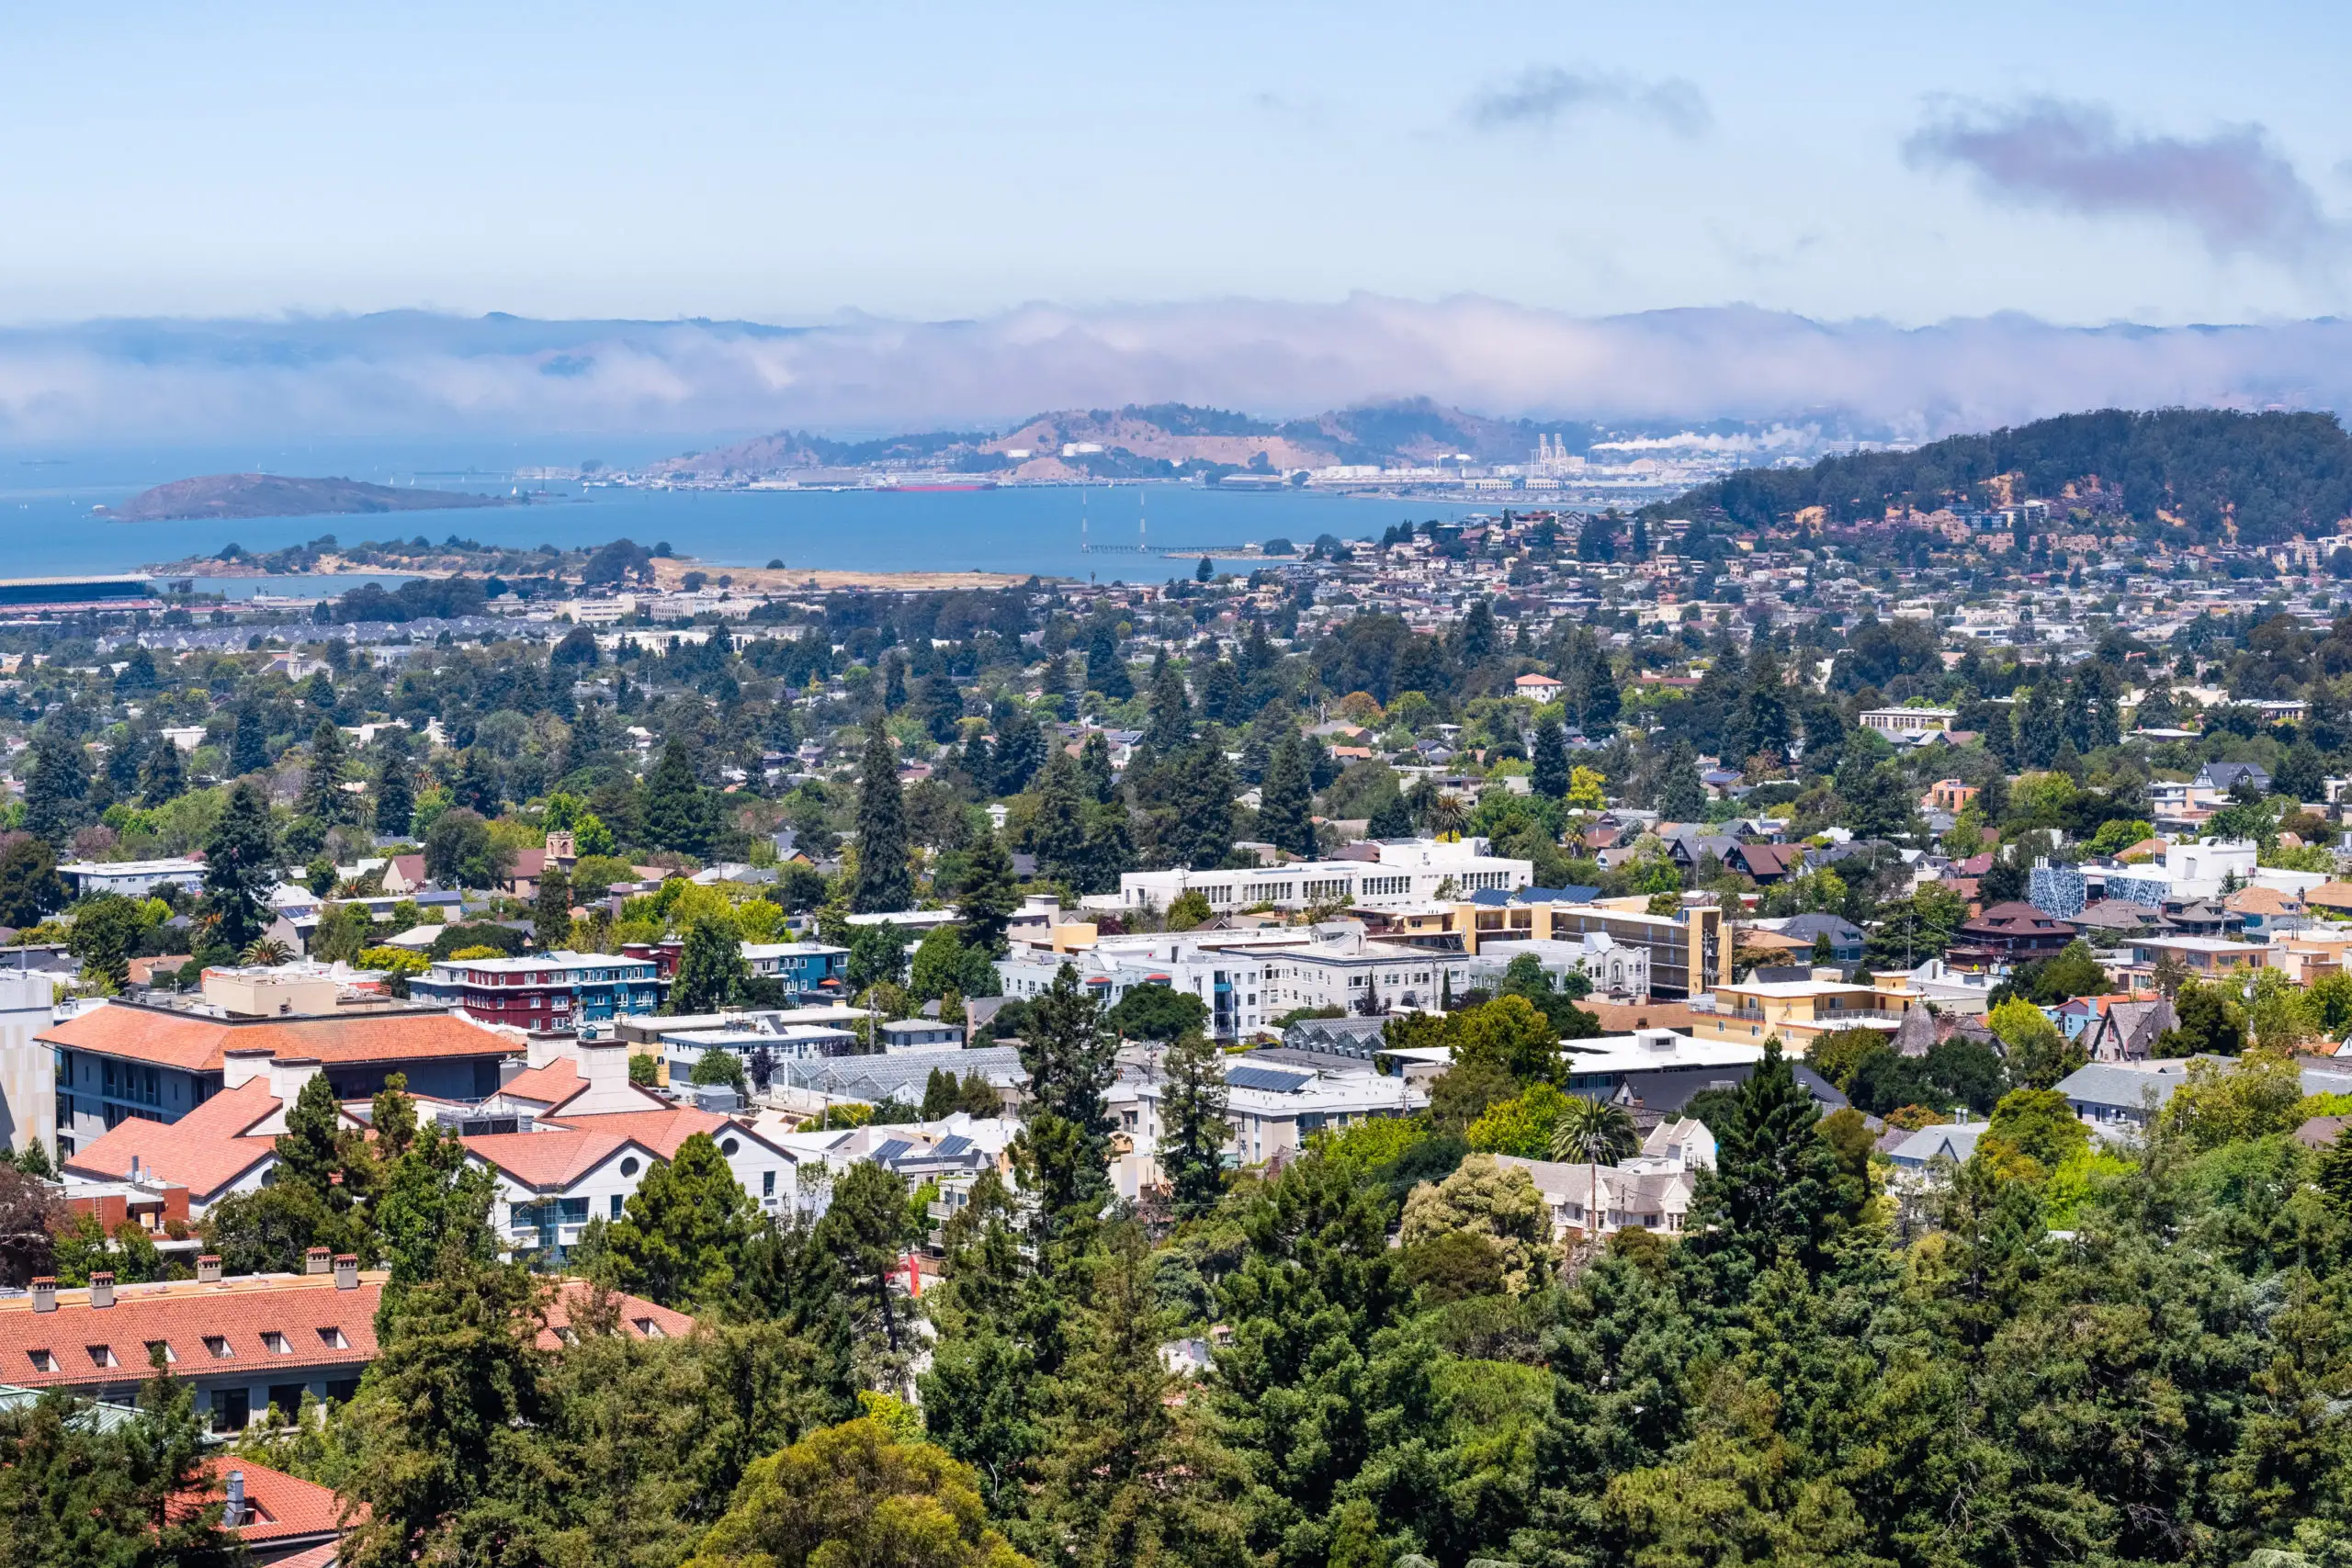 Aerial view of skyline of Berkeley, California